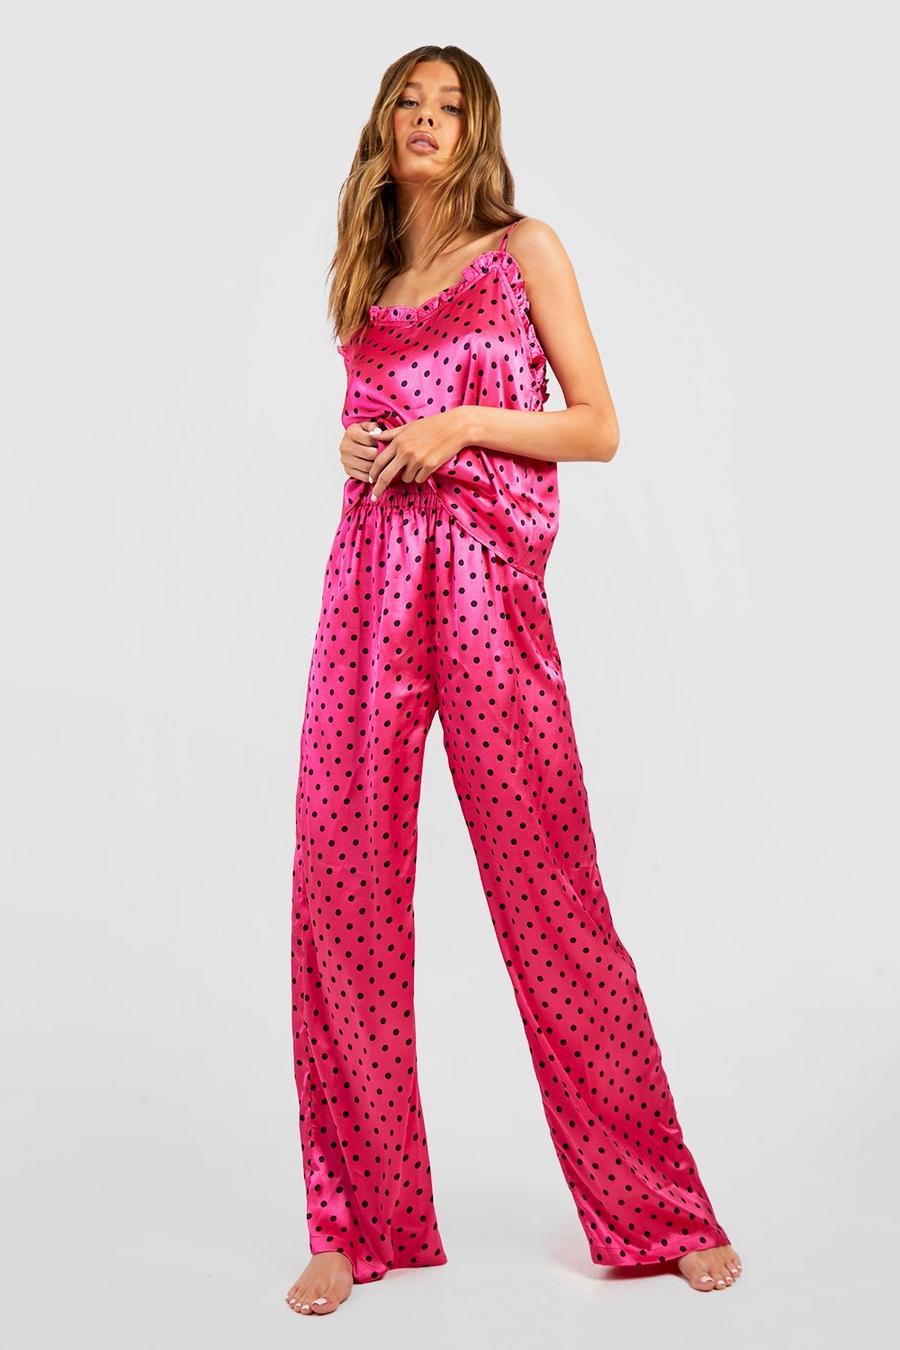 Pink Polka Dot Satin Cami Pants Pajama Set image number 1